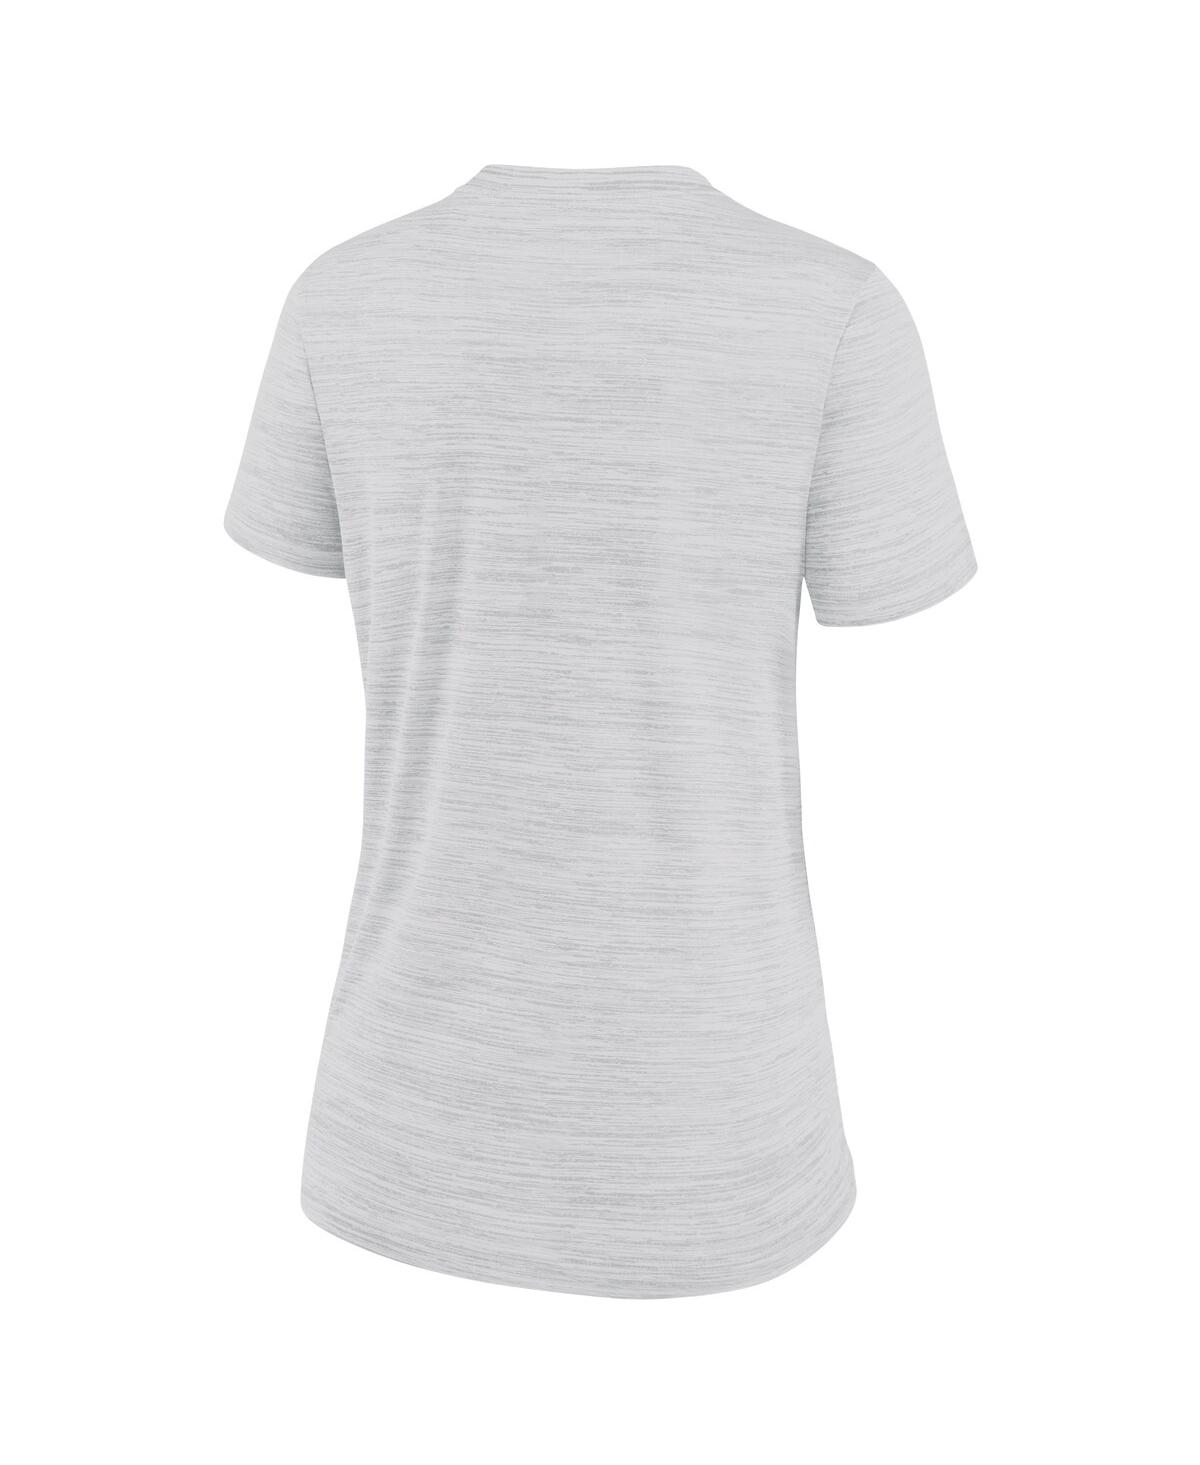 Shop Nike Women's  White San Francisco Giants City Connect Velocity Practice Performance V-neck T-shirt